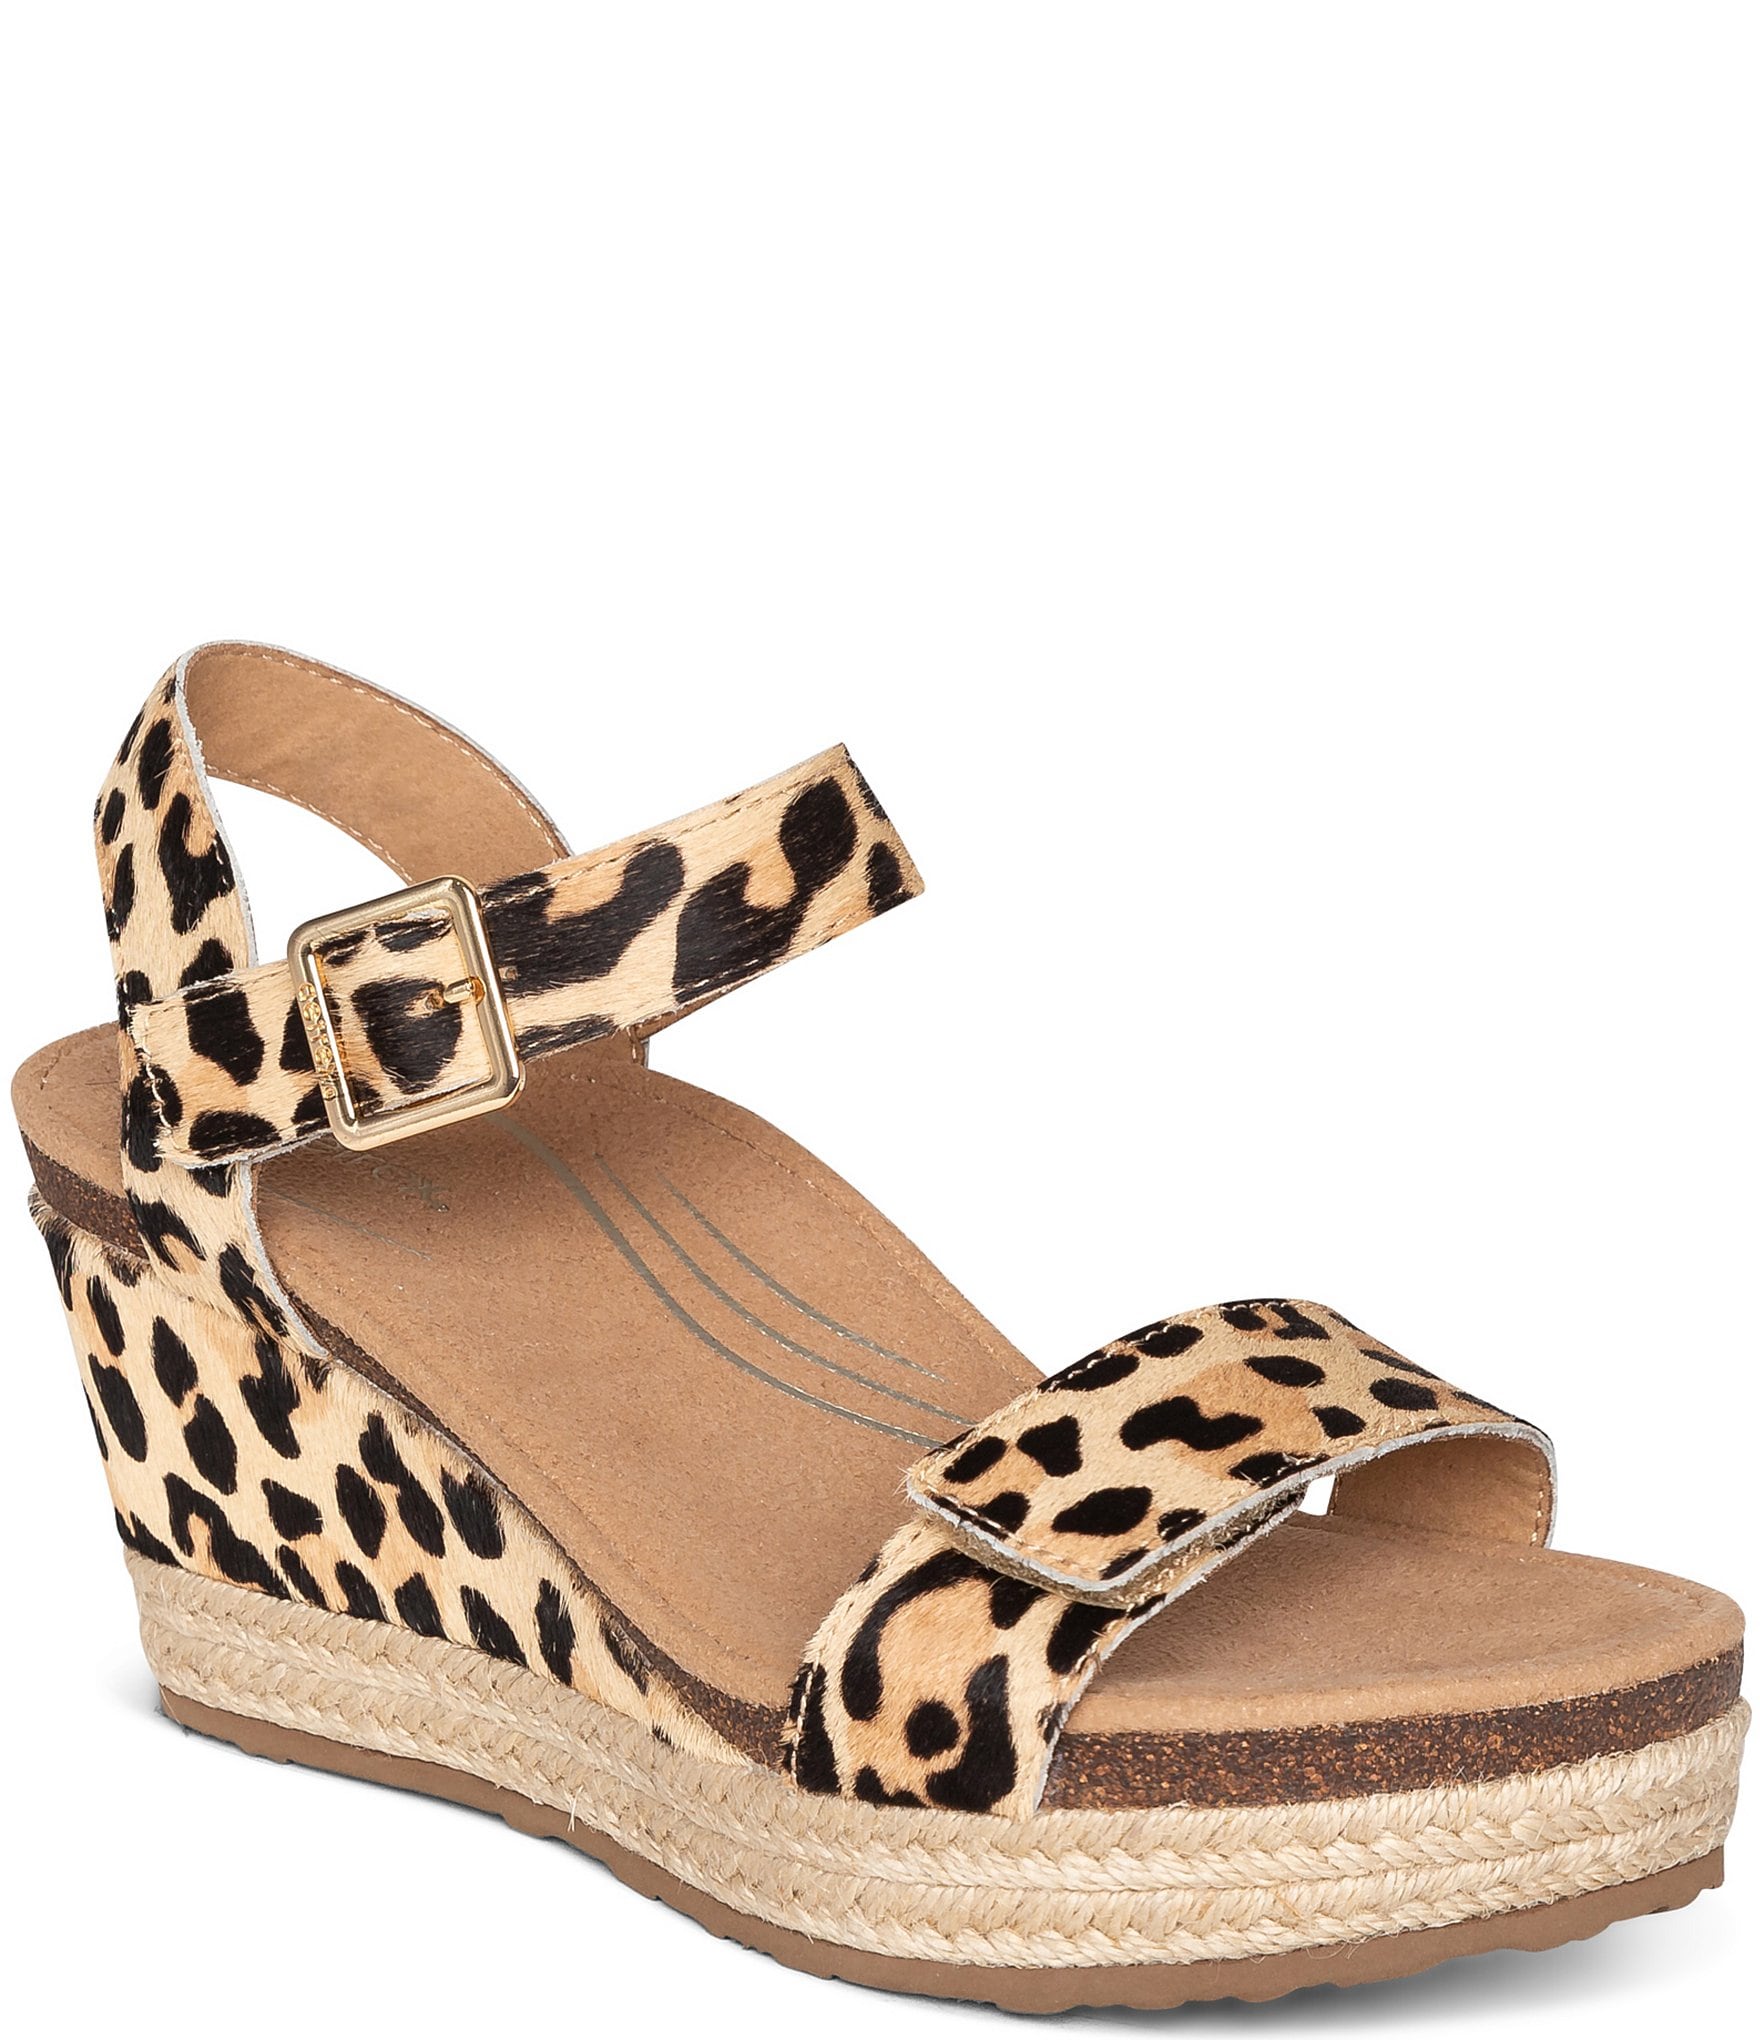 Women Shoes Wedges Diamond Gift Leopard Espadrilles T-Strap Beaded Sandals US 